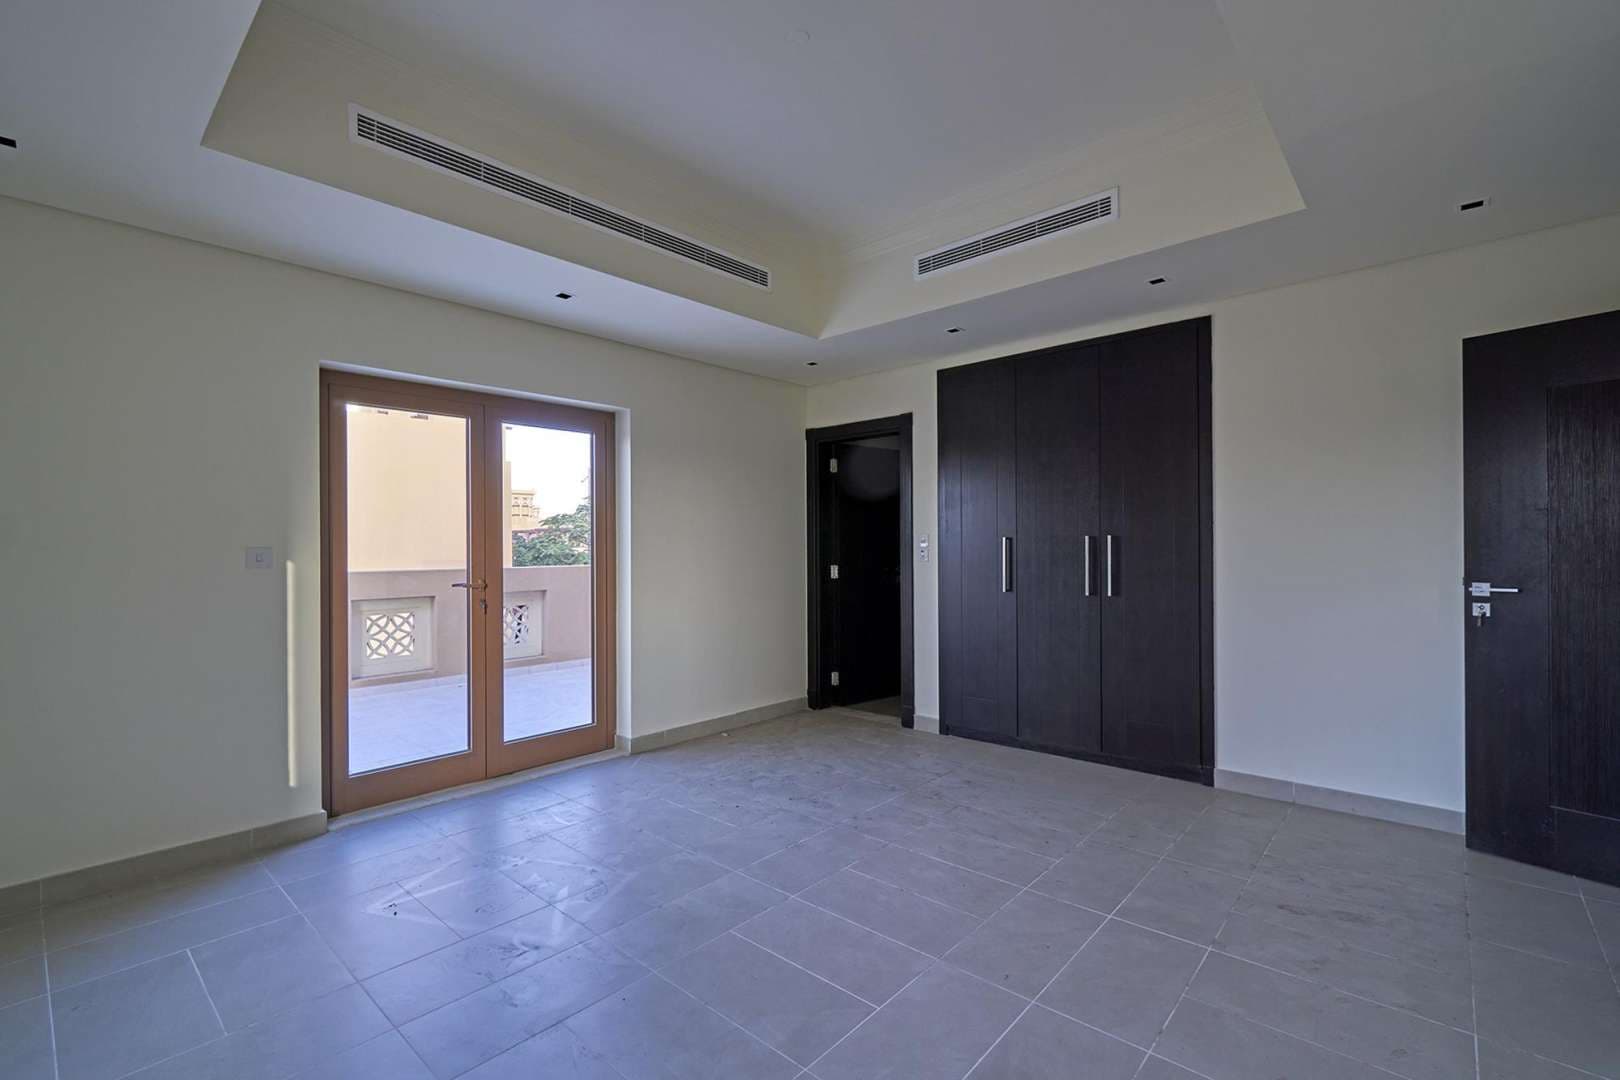 6 Bedroom Villa For Rent Dubai Style Lp05963 11293a4d59b59500.jpg